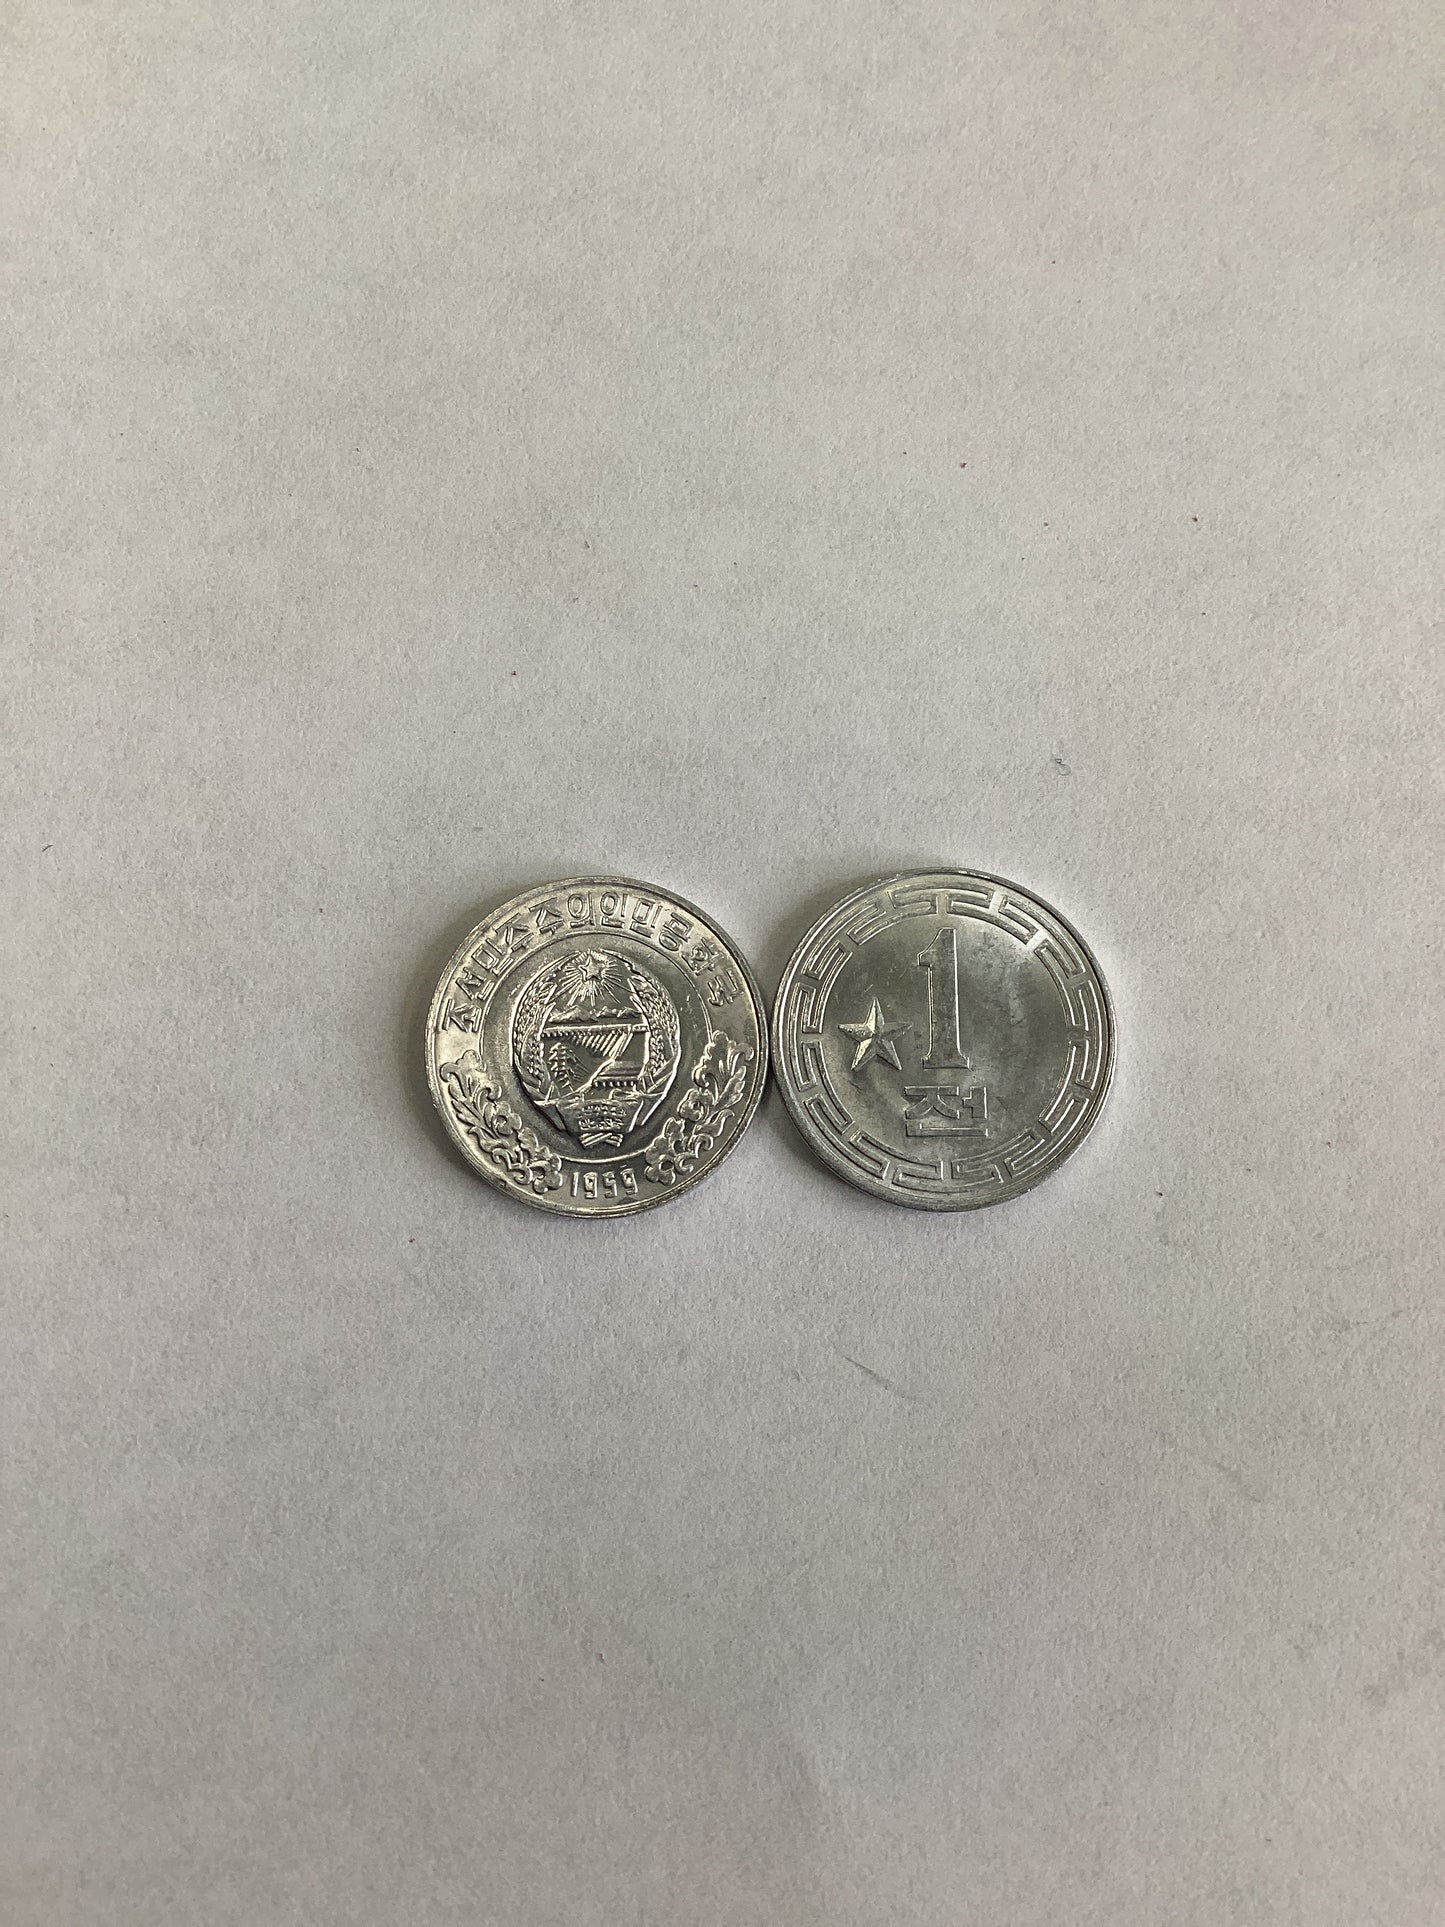 DPRK 1 Won Coin Aluminum Dated 1959